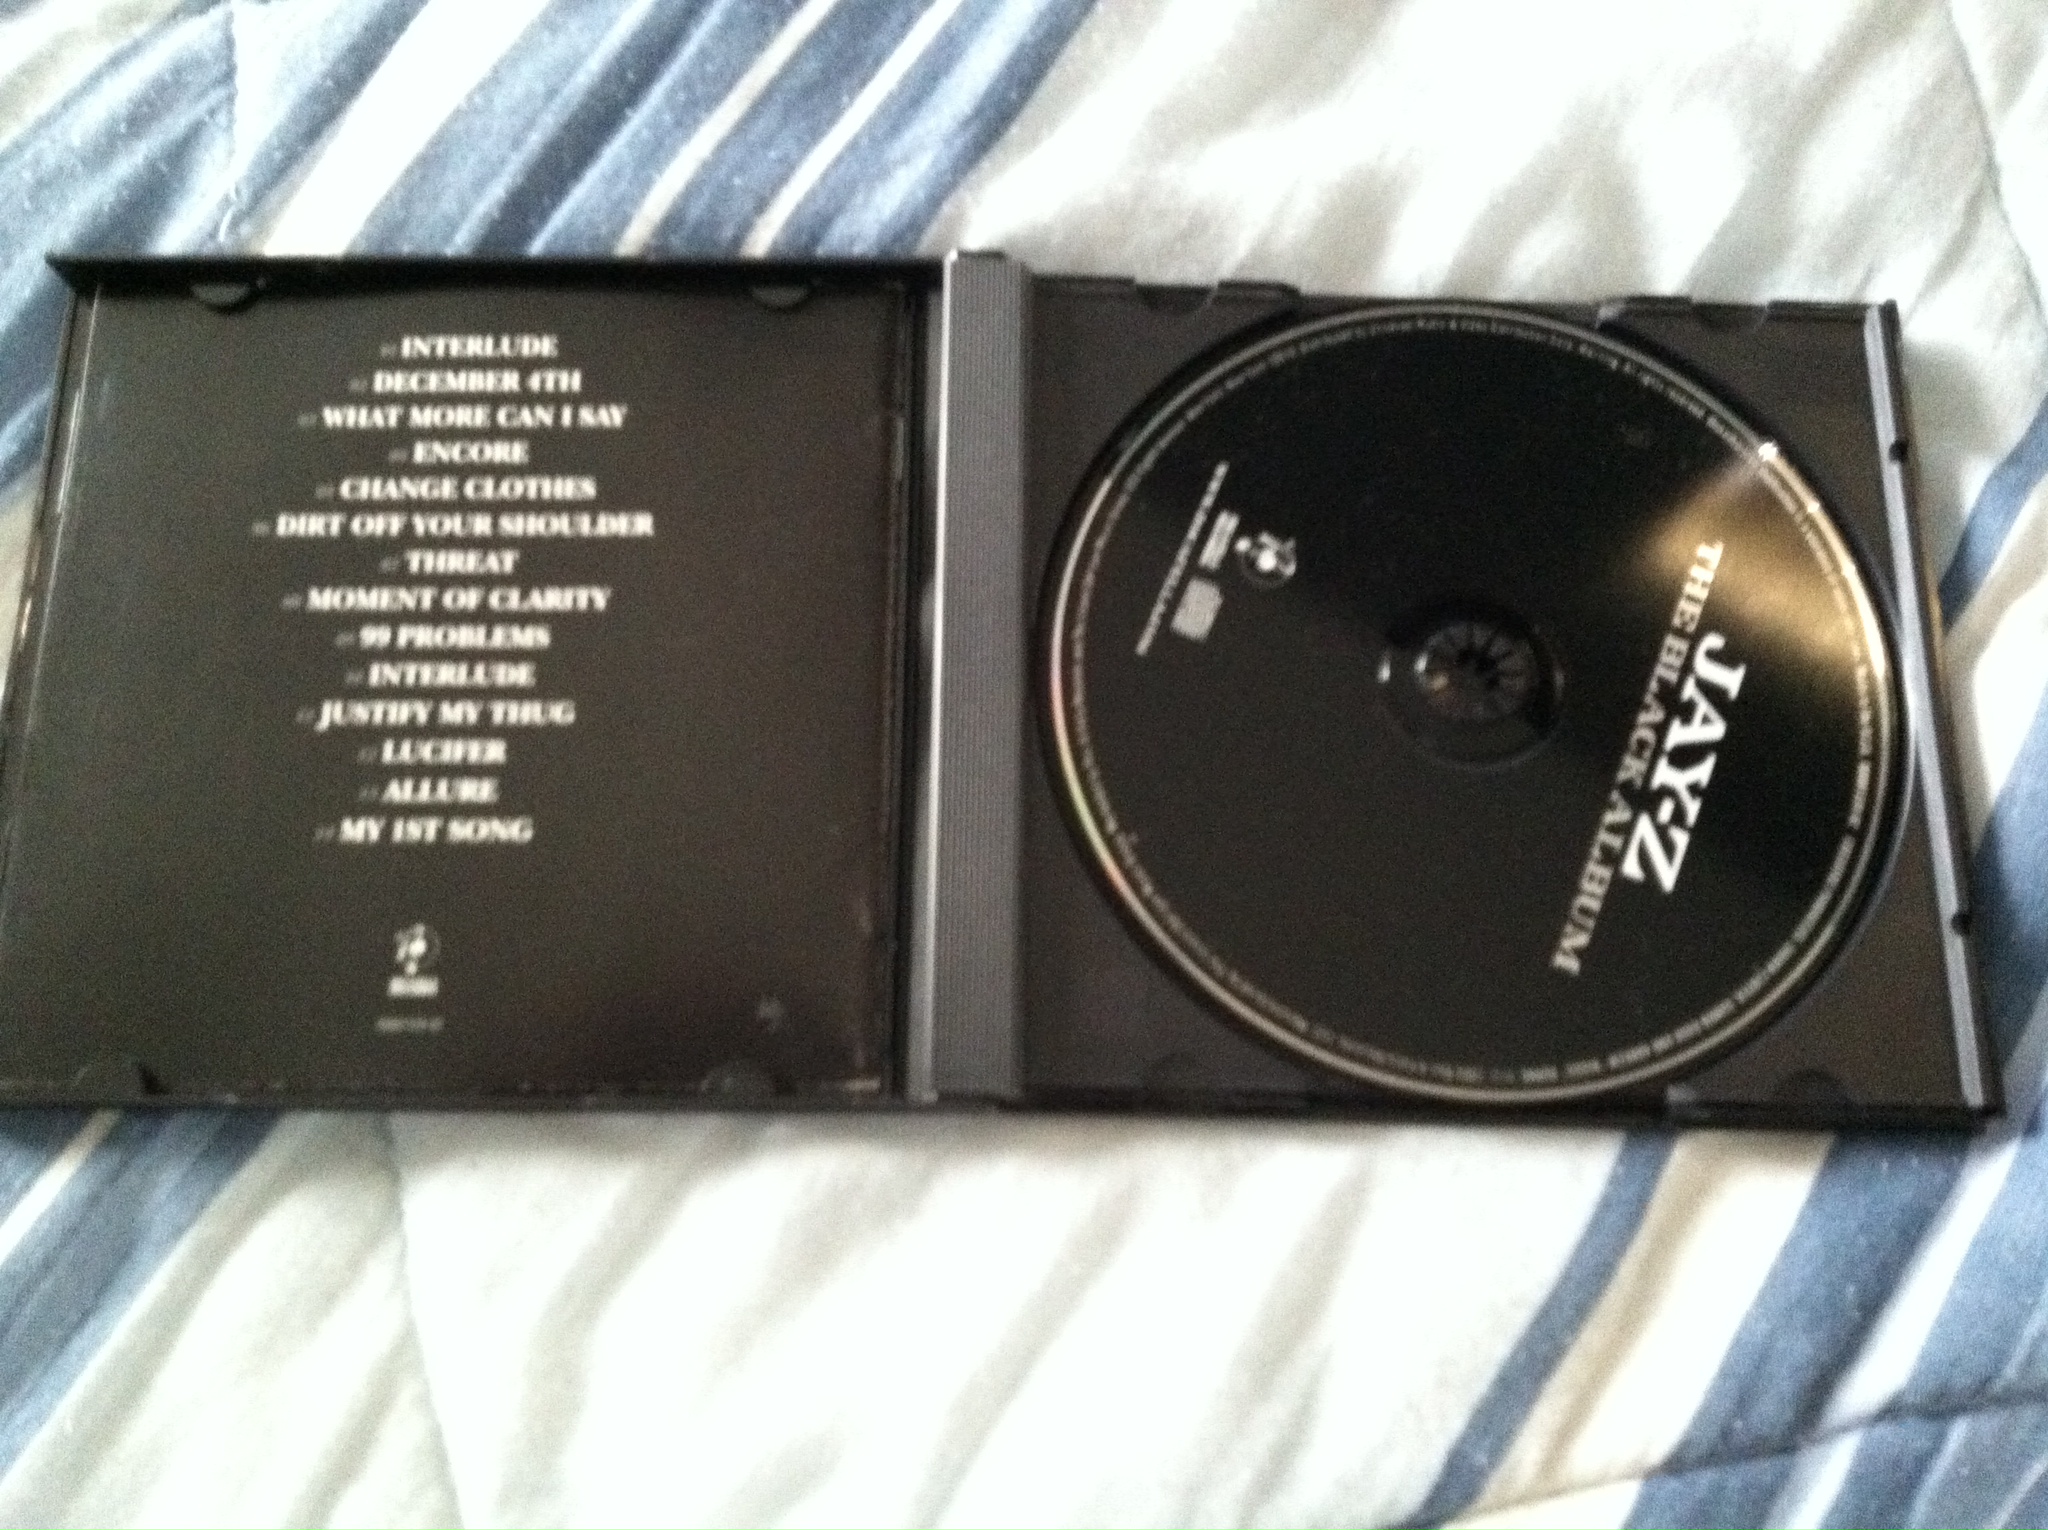 jay z the black album album